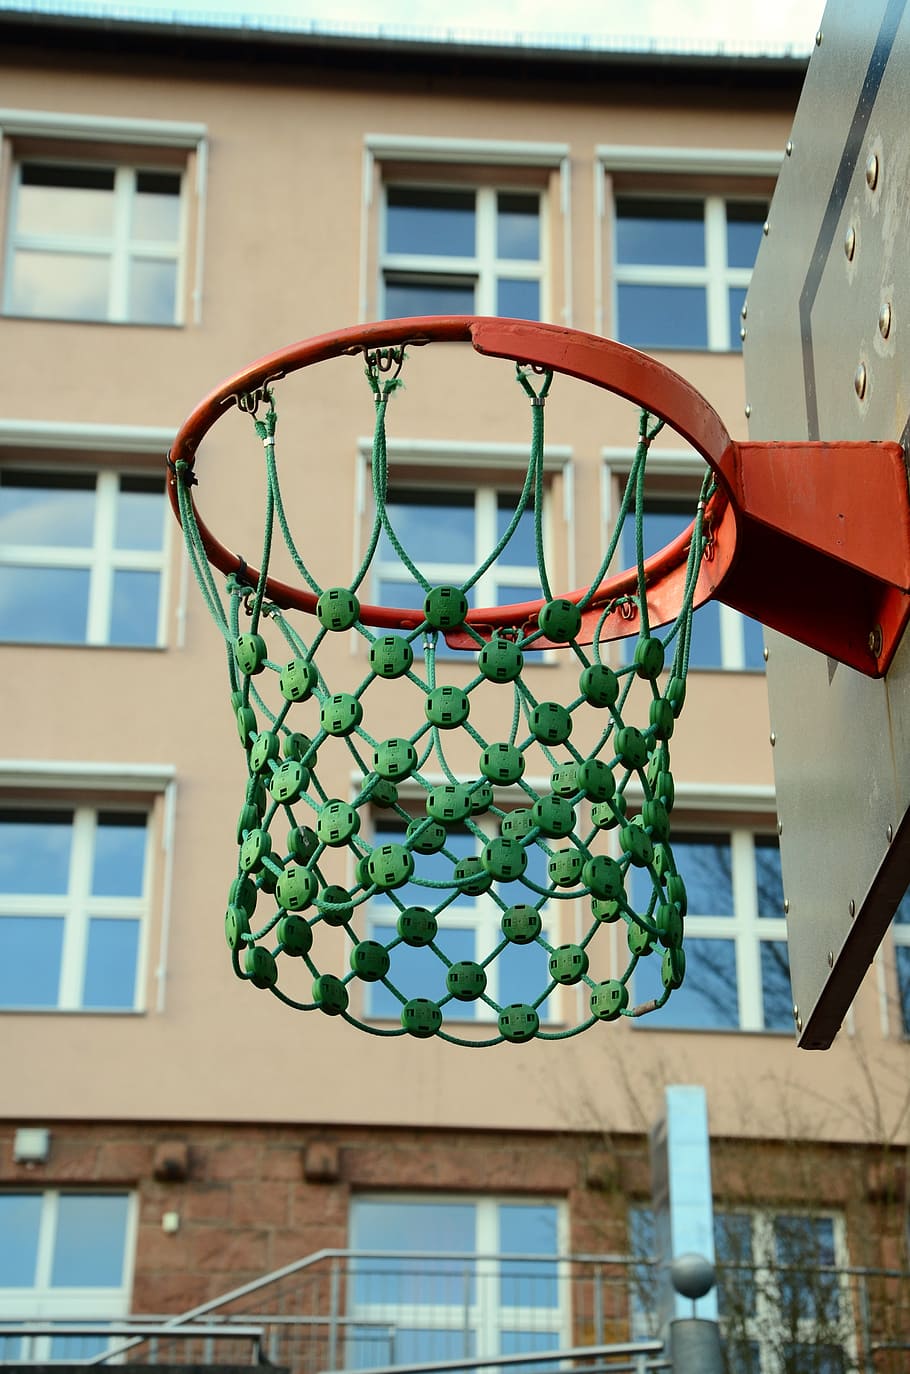 green basketball hoop, school, schoolyard, sport, play, break